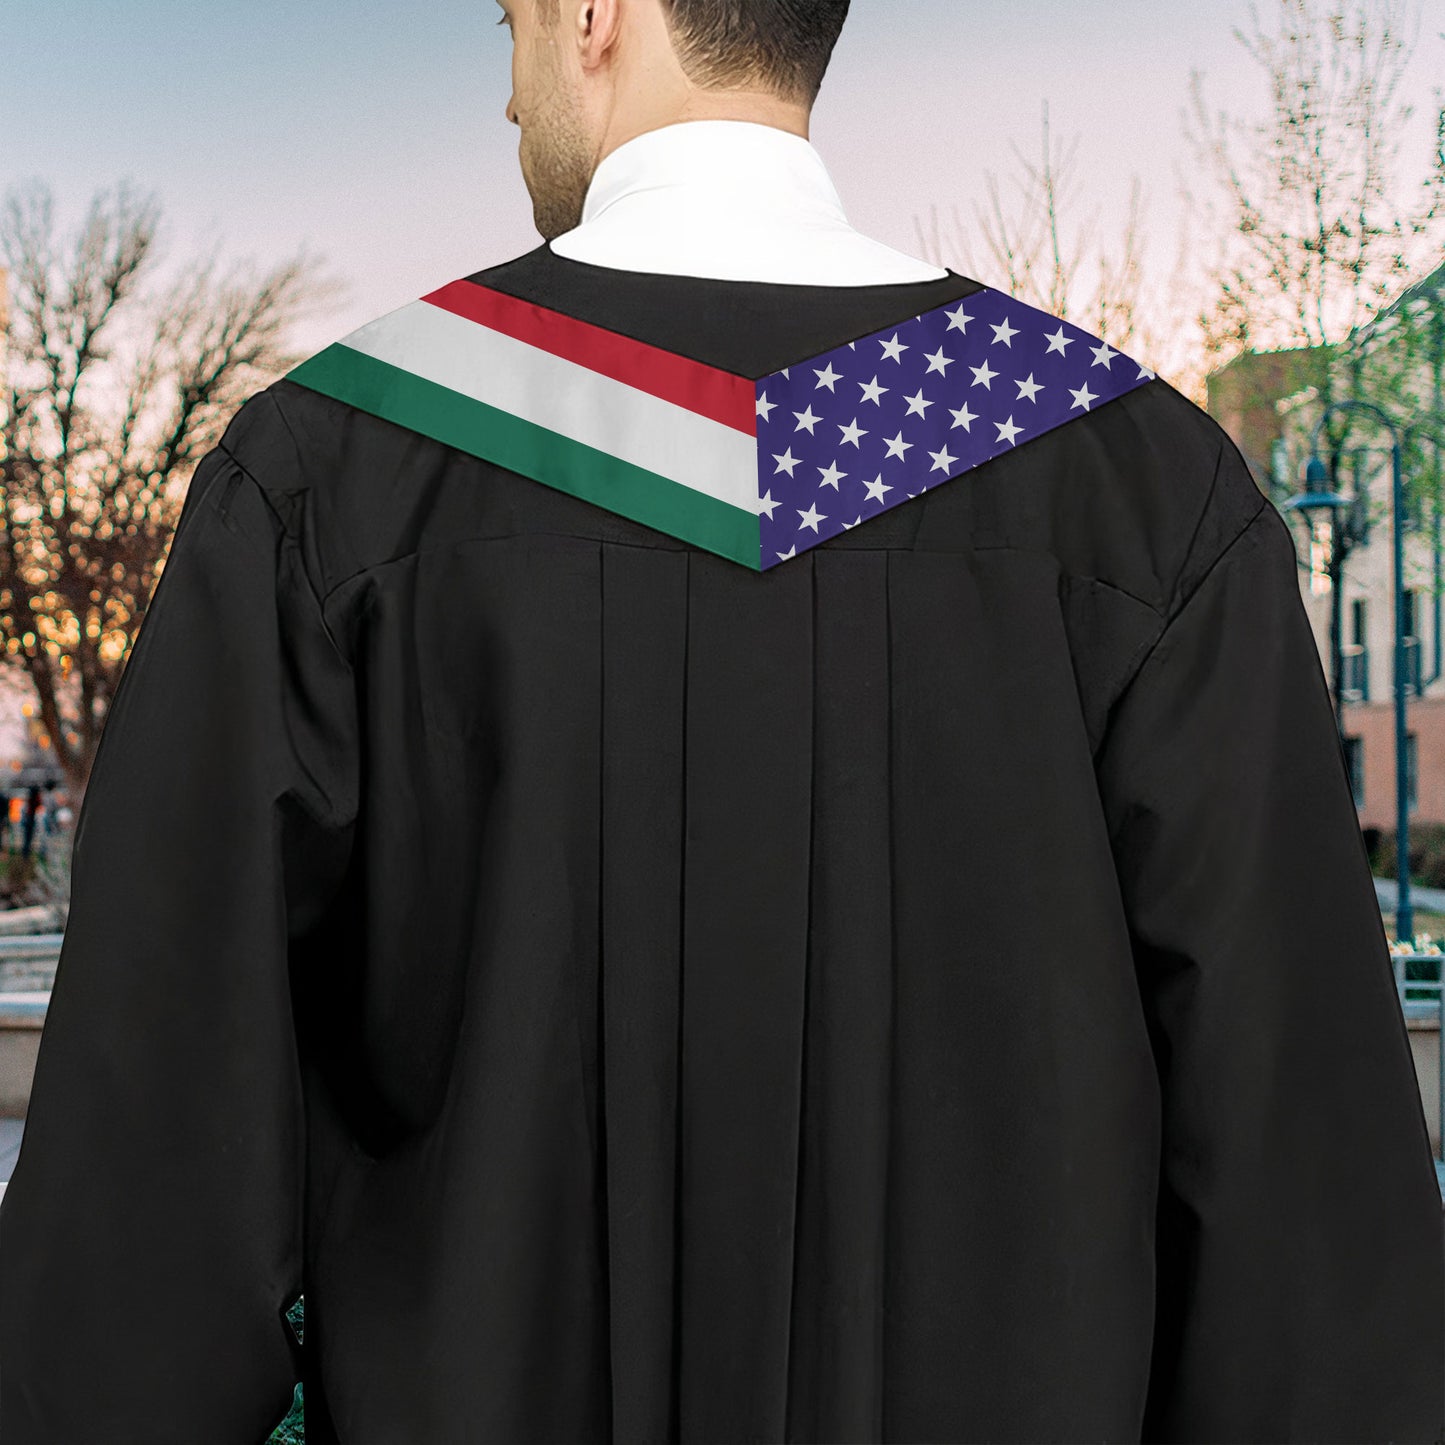 Graduation Flags - Personalized Photo Graduation Stole